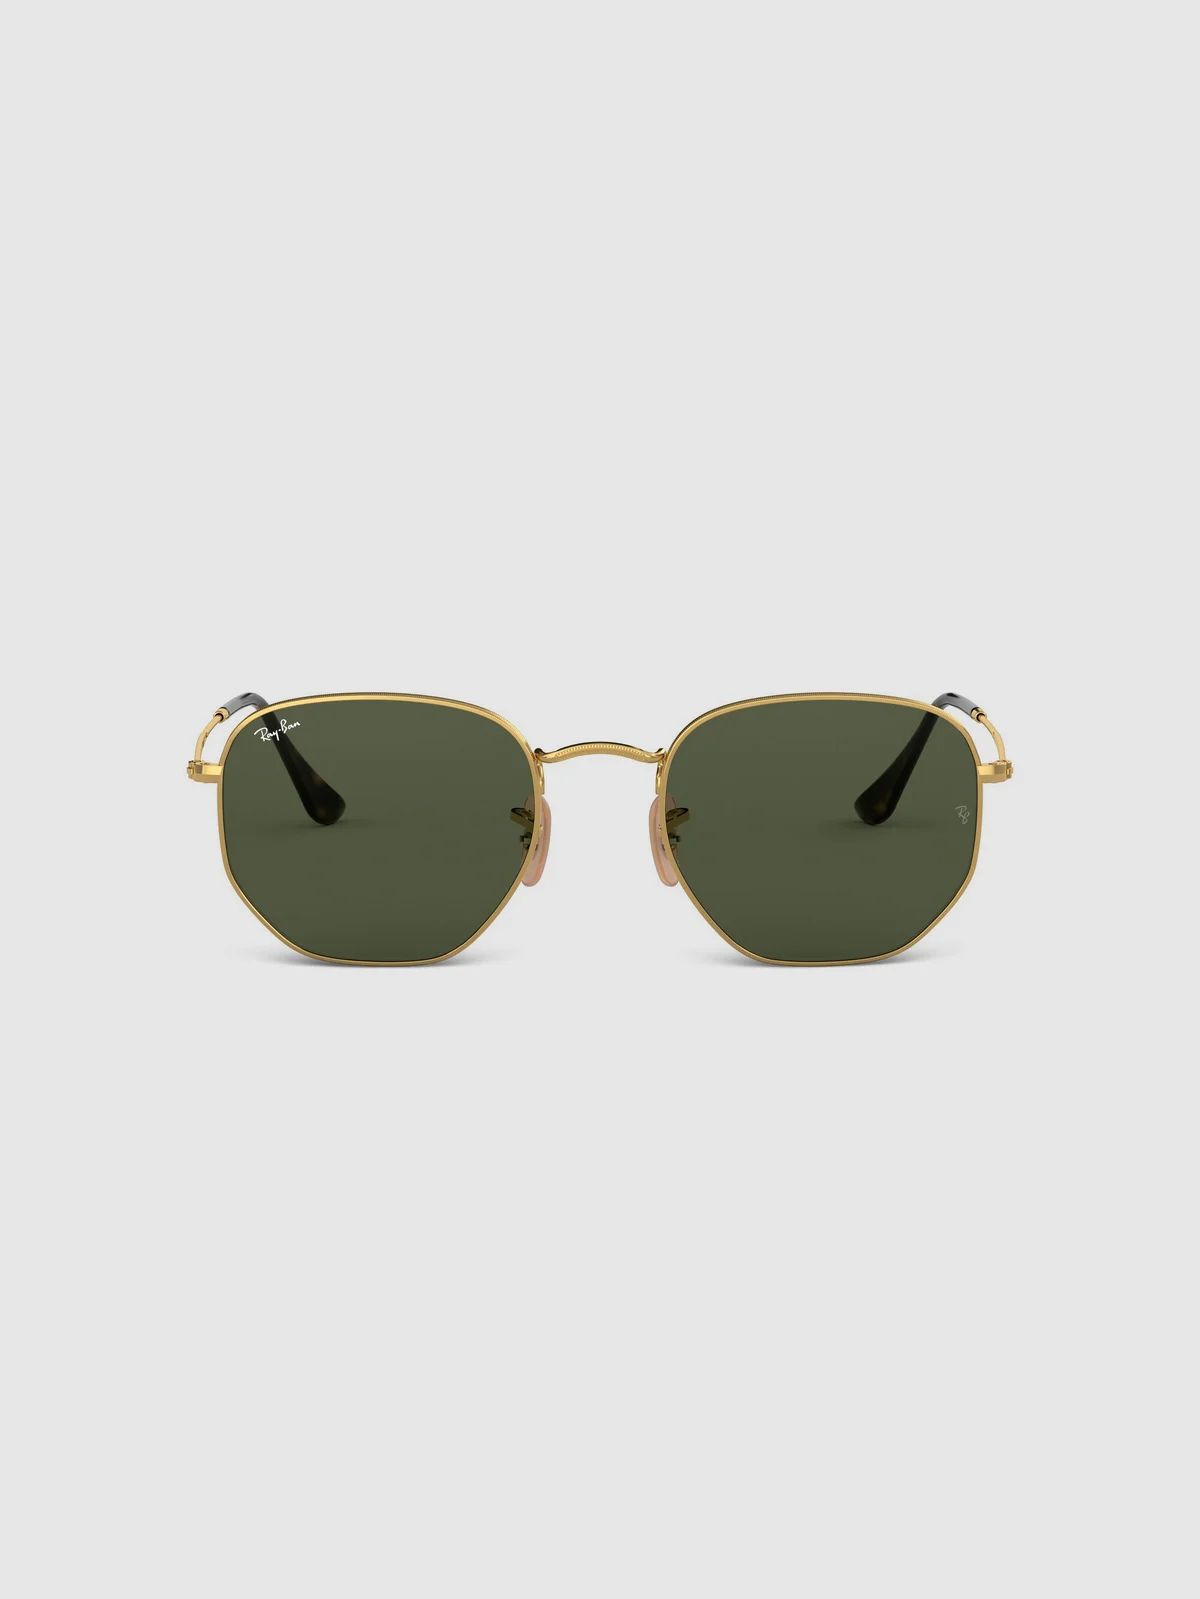 RB3548N 51 Solid Hexagonal Sunglasses | Verishop